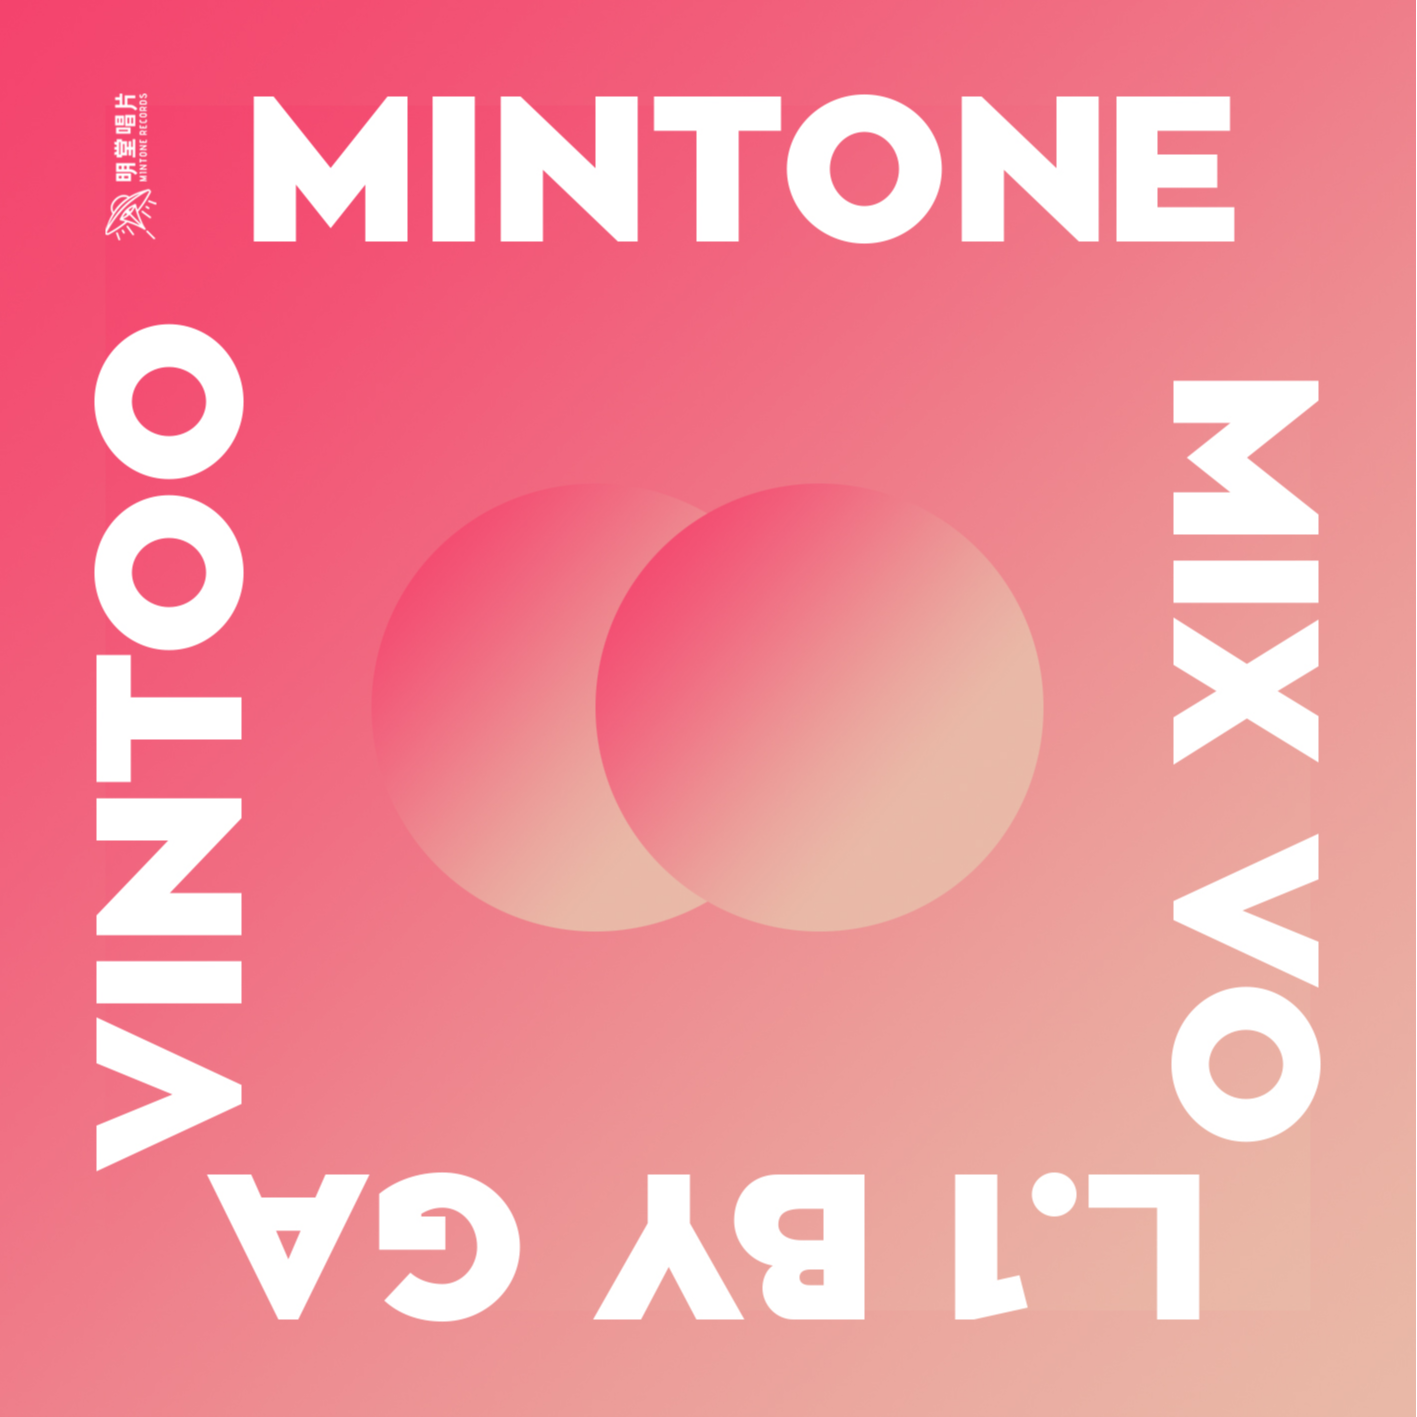 Mintone Mix Vol.1 by Gavintoo